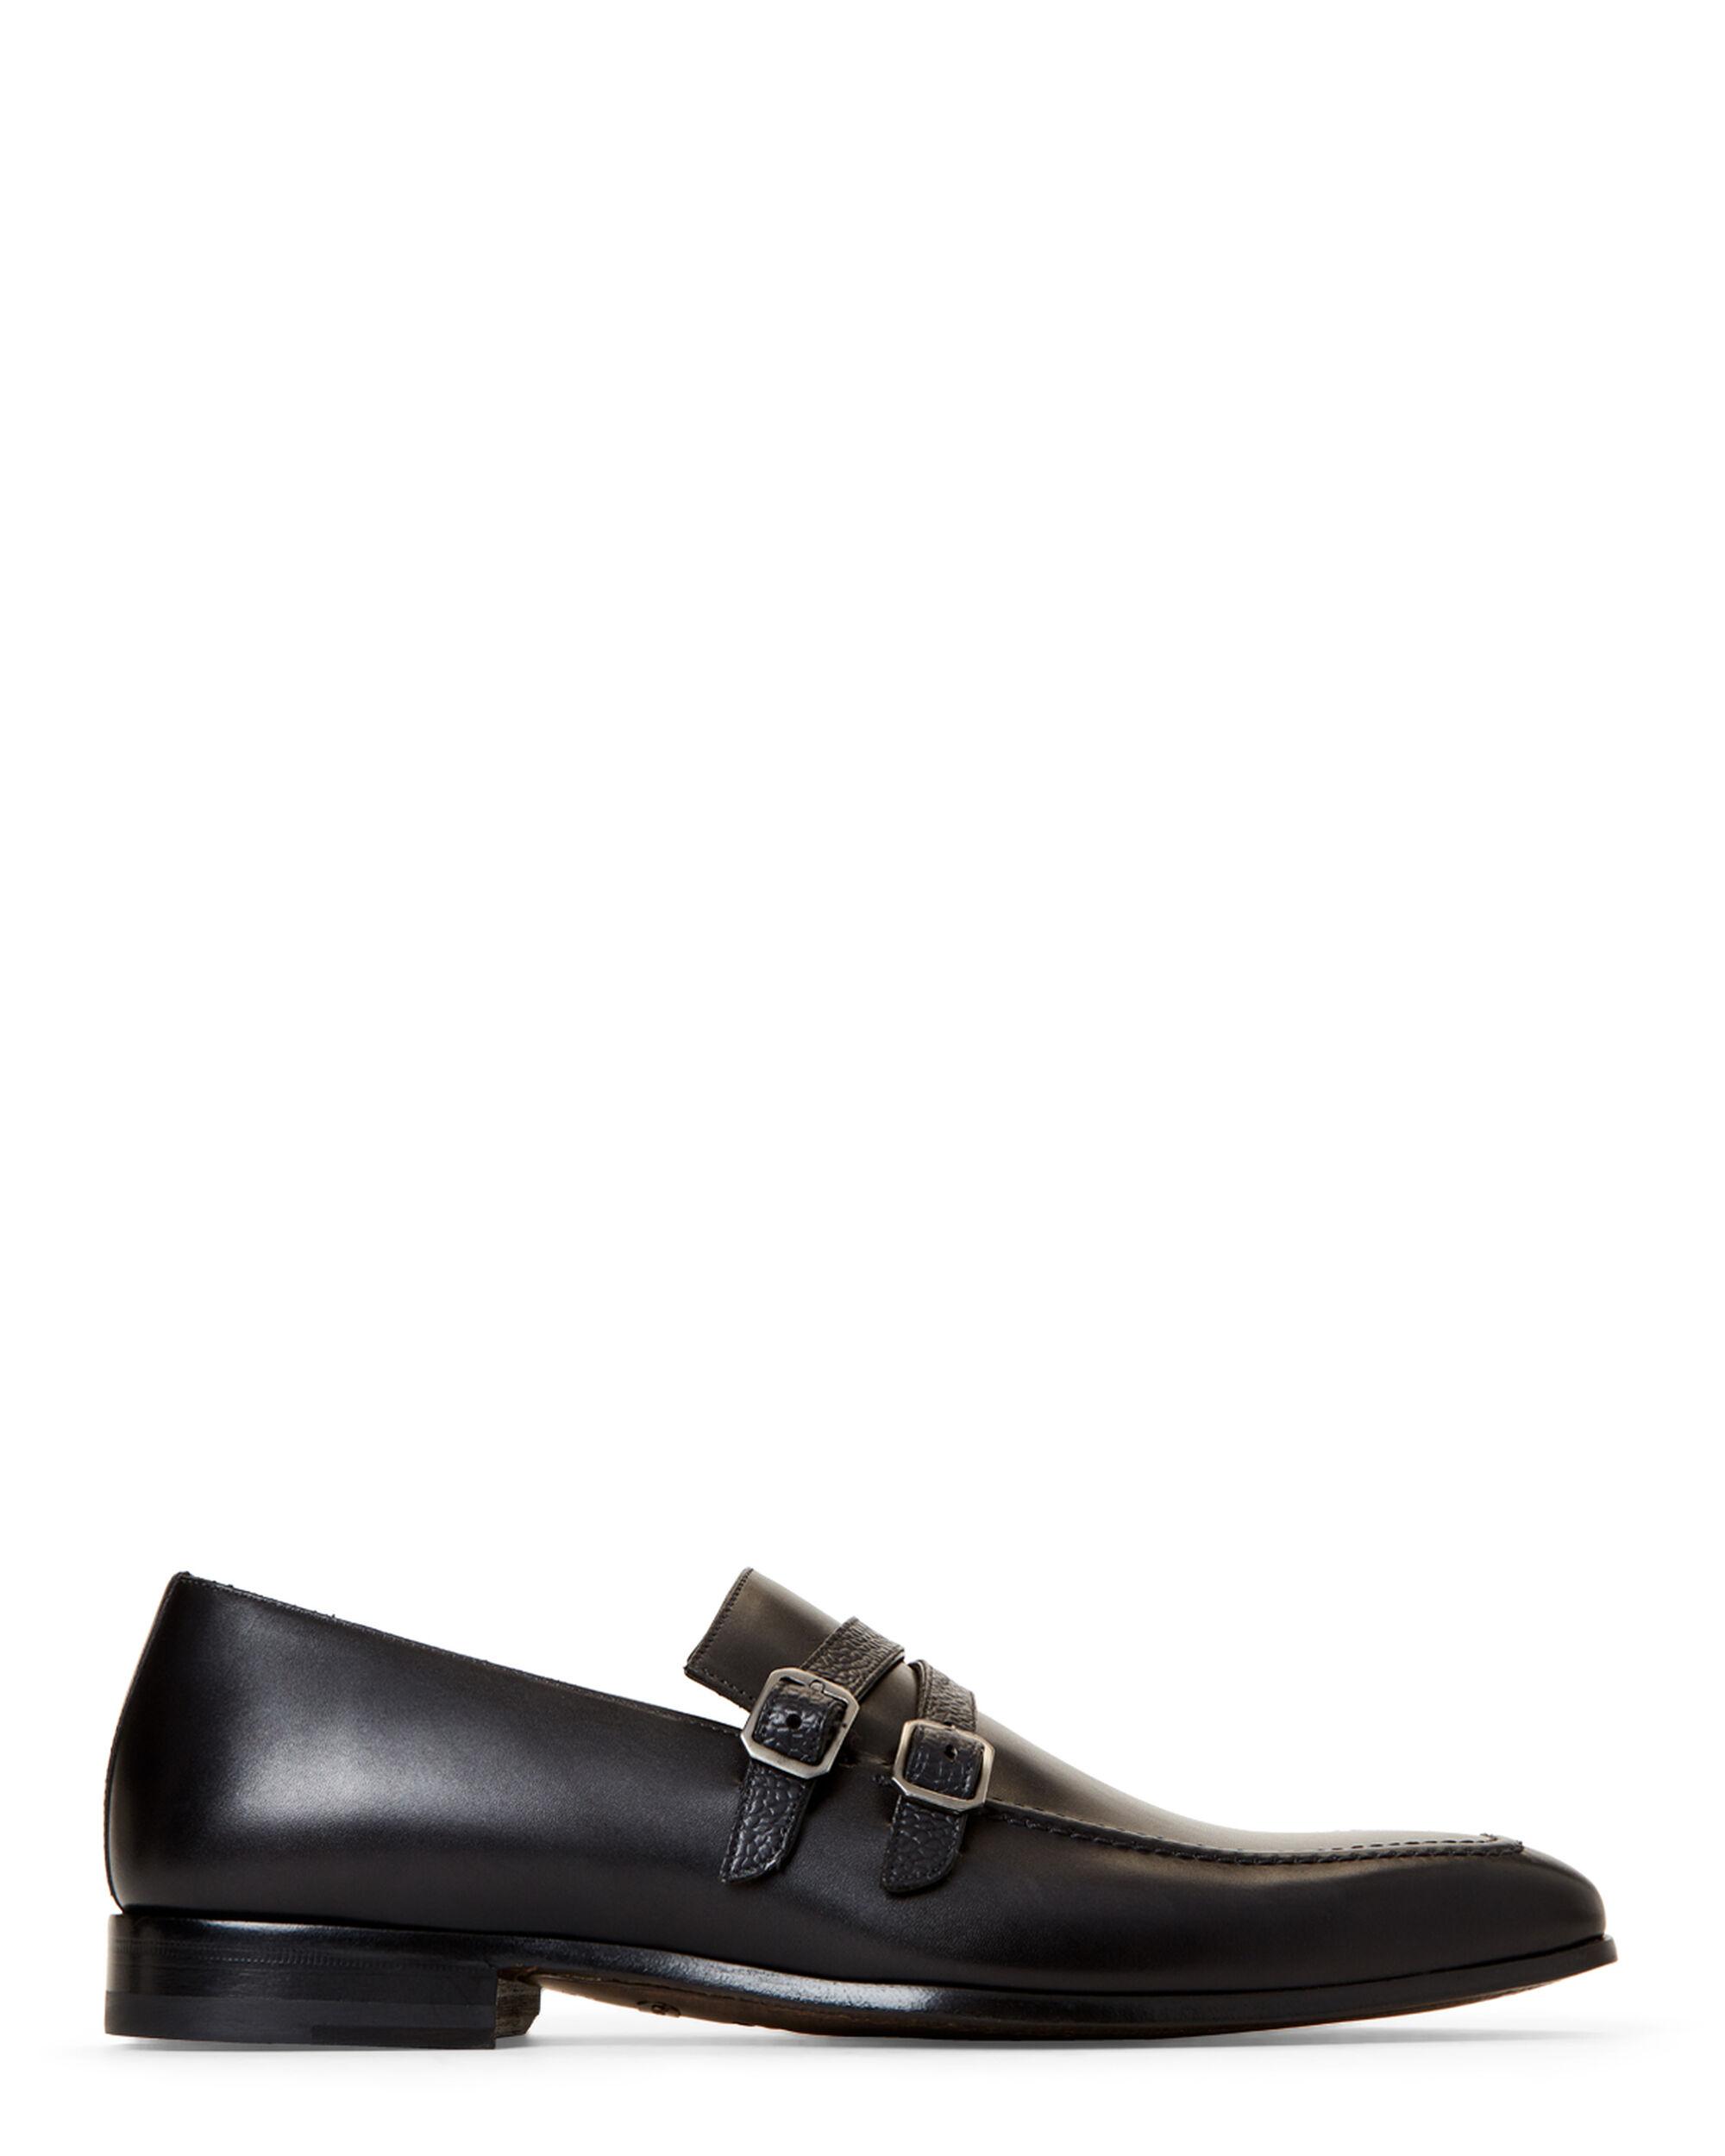 Mezlan Black Puma Leather Loafers for Men - Lyst